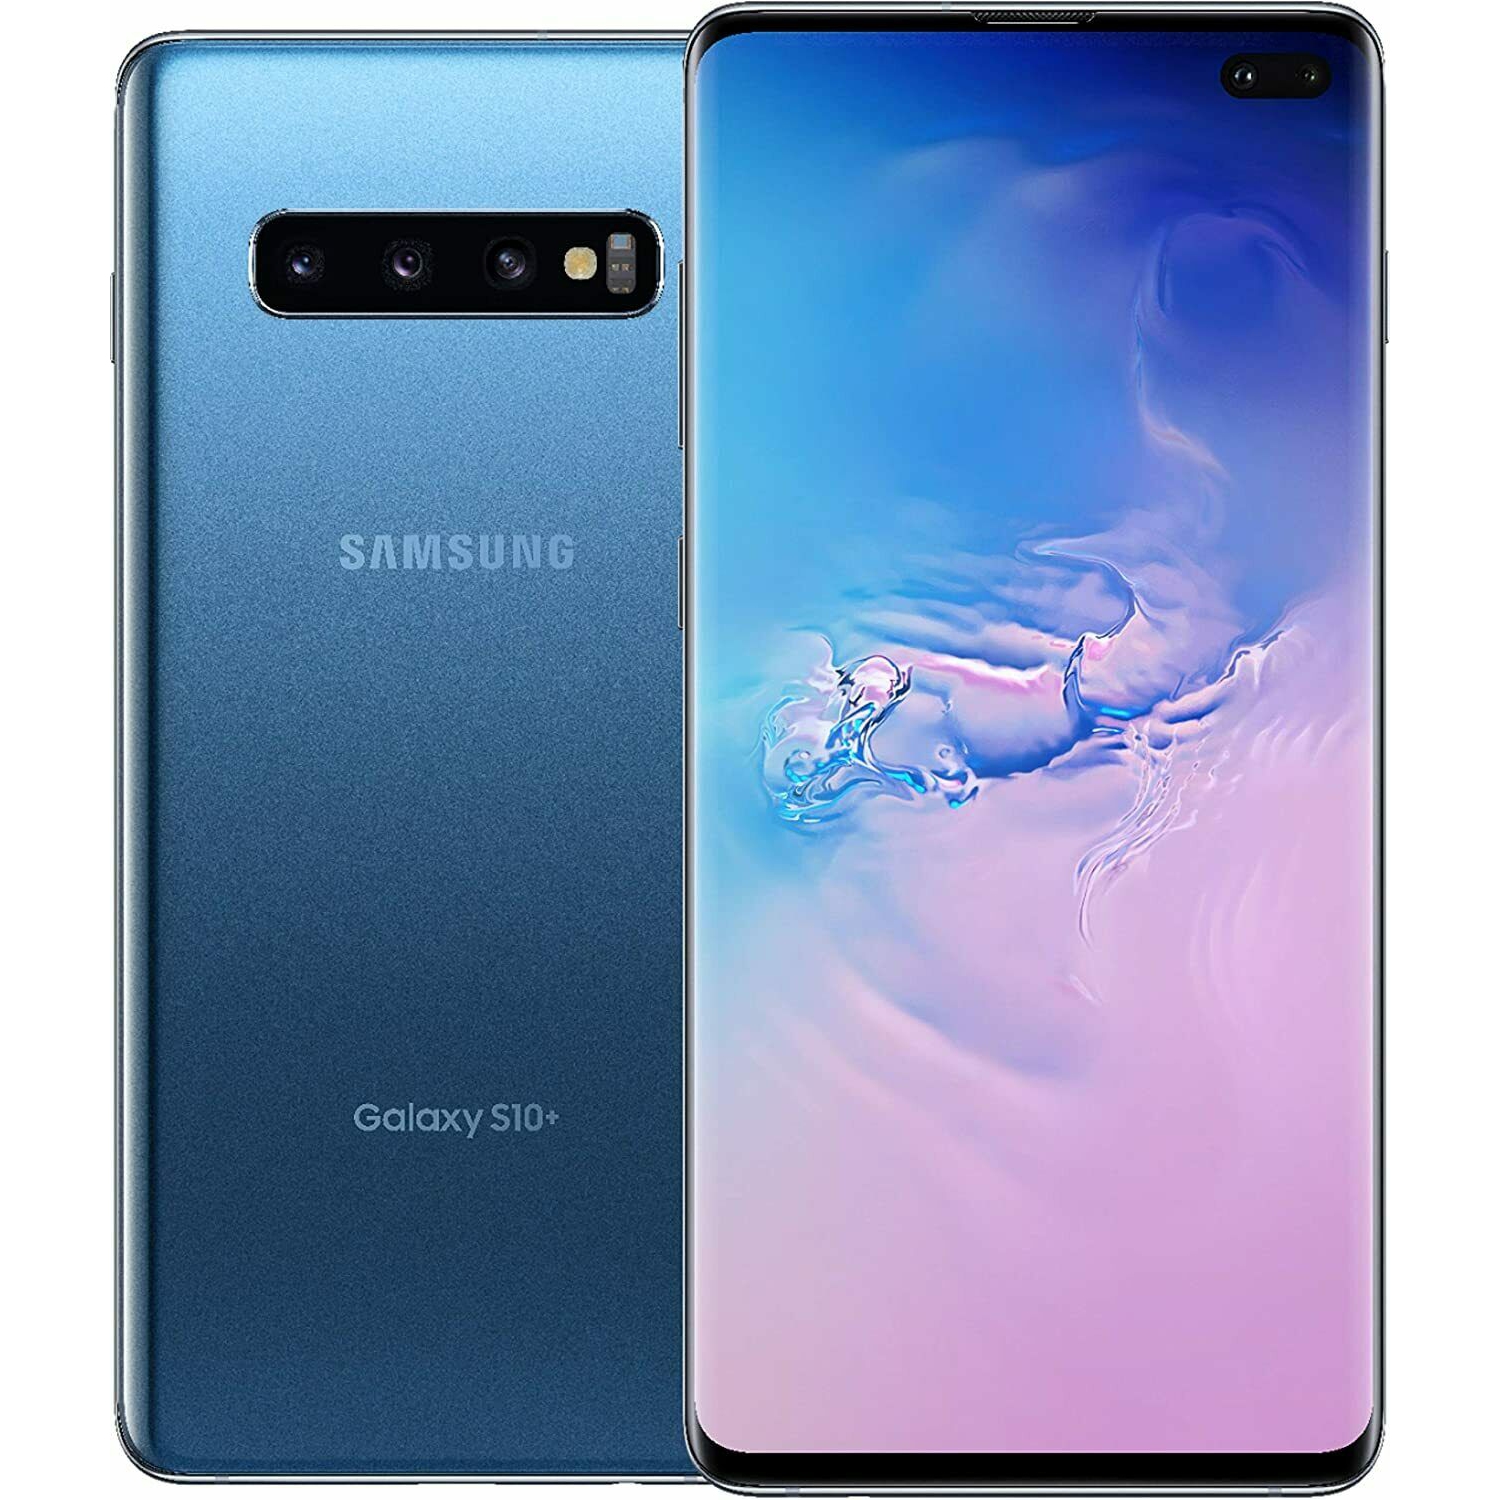 Samsung Galaxy S10 Plus 128GB (SM-G975U) - Prism Blue - GSM Unlocked Smartphone - International Model - Open Box